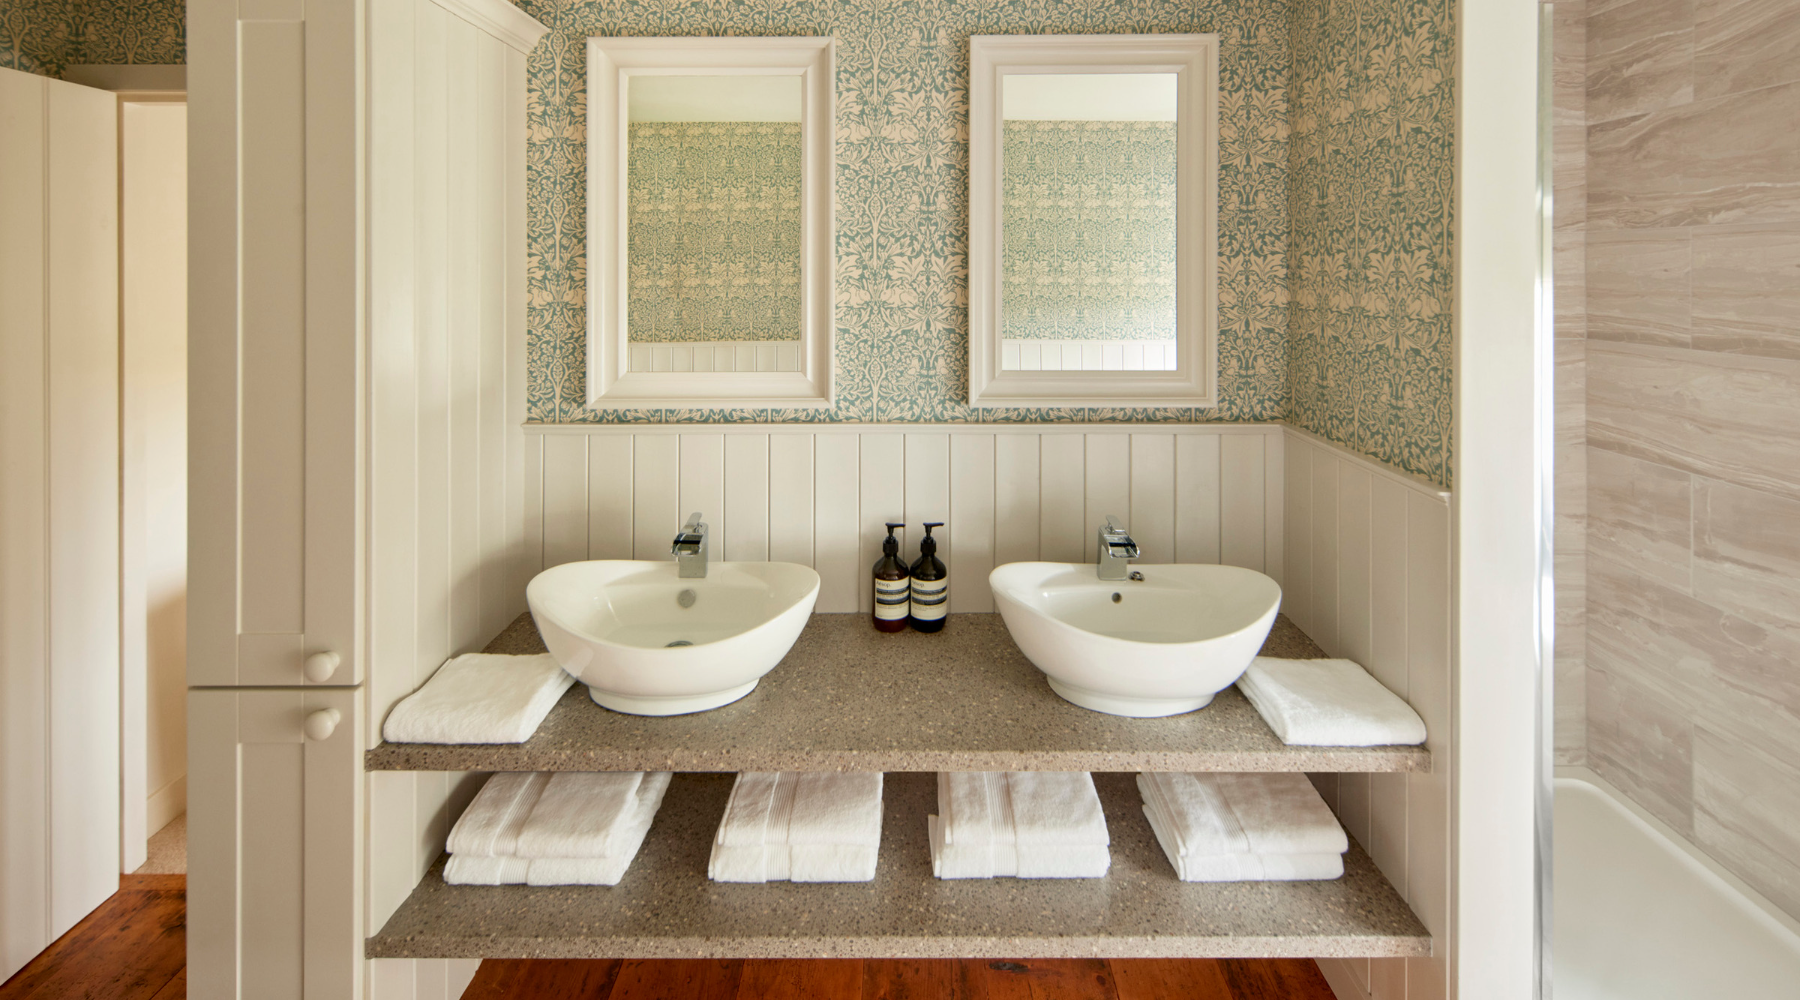 Omaze Million Pound House Lake District - white basins and mirror in bathroom